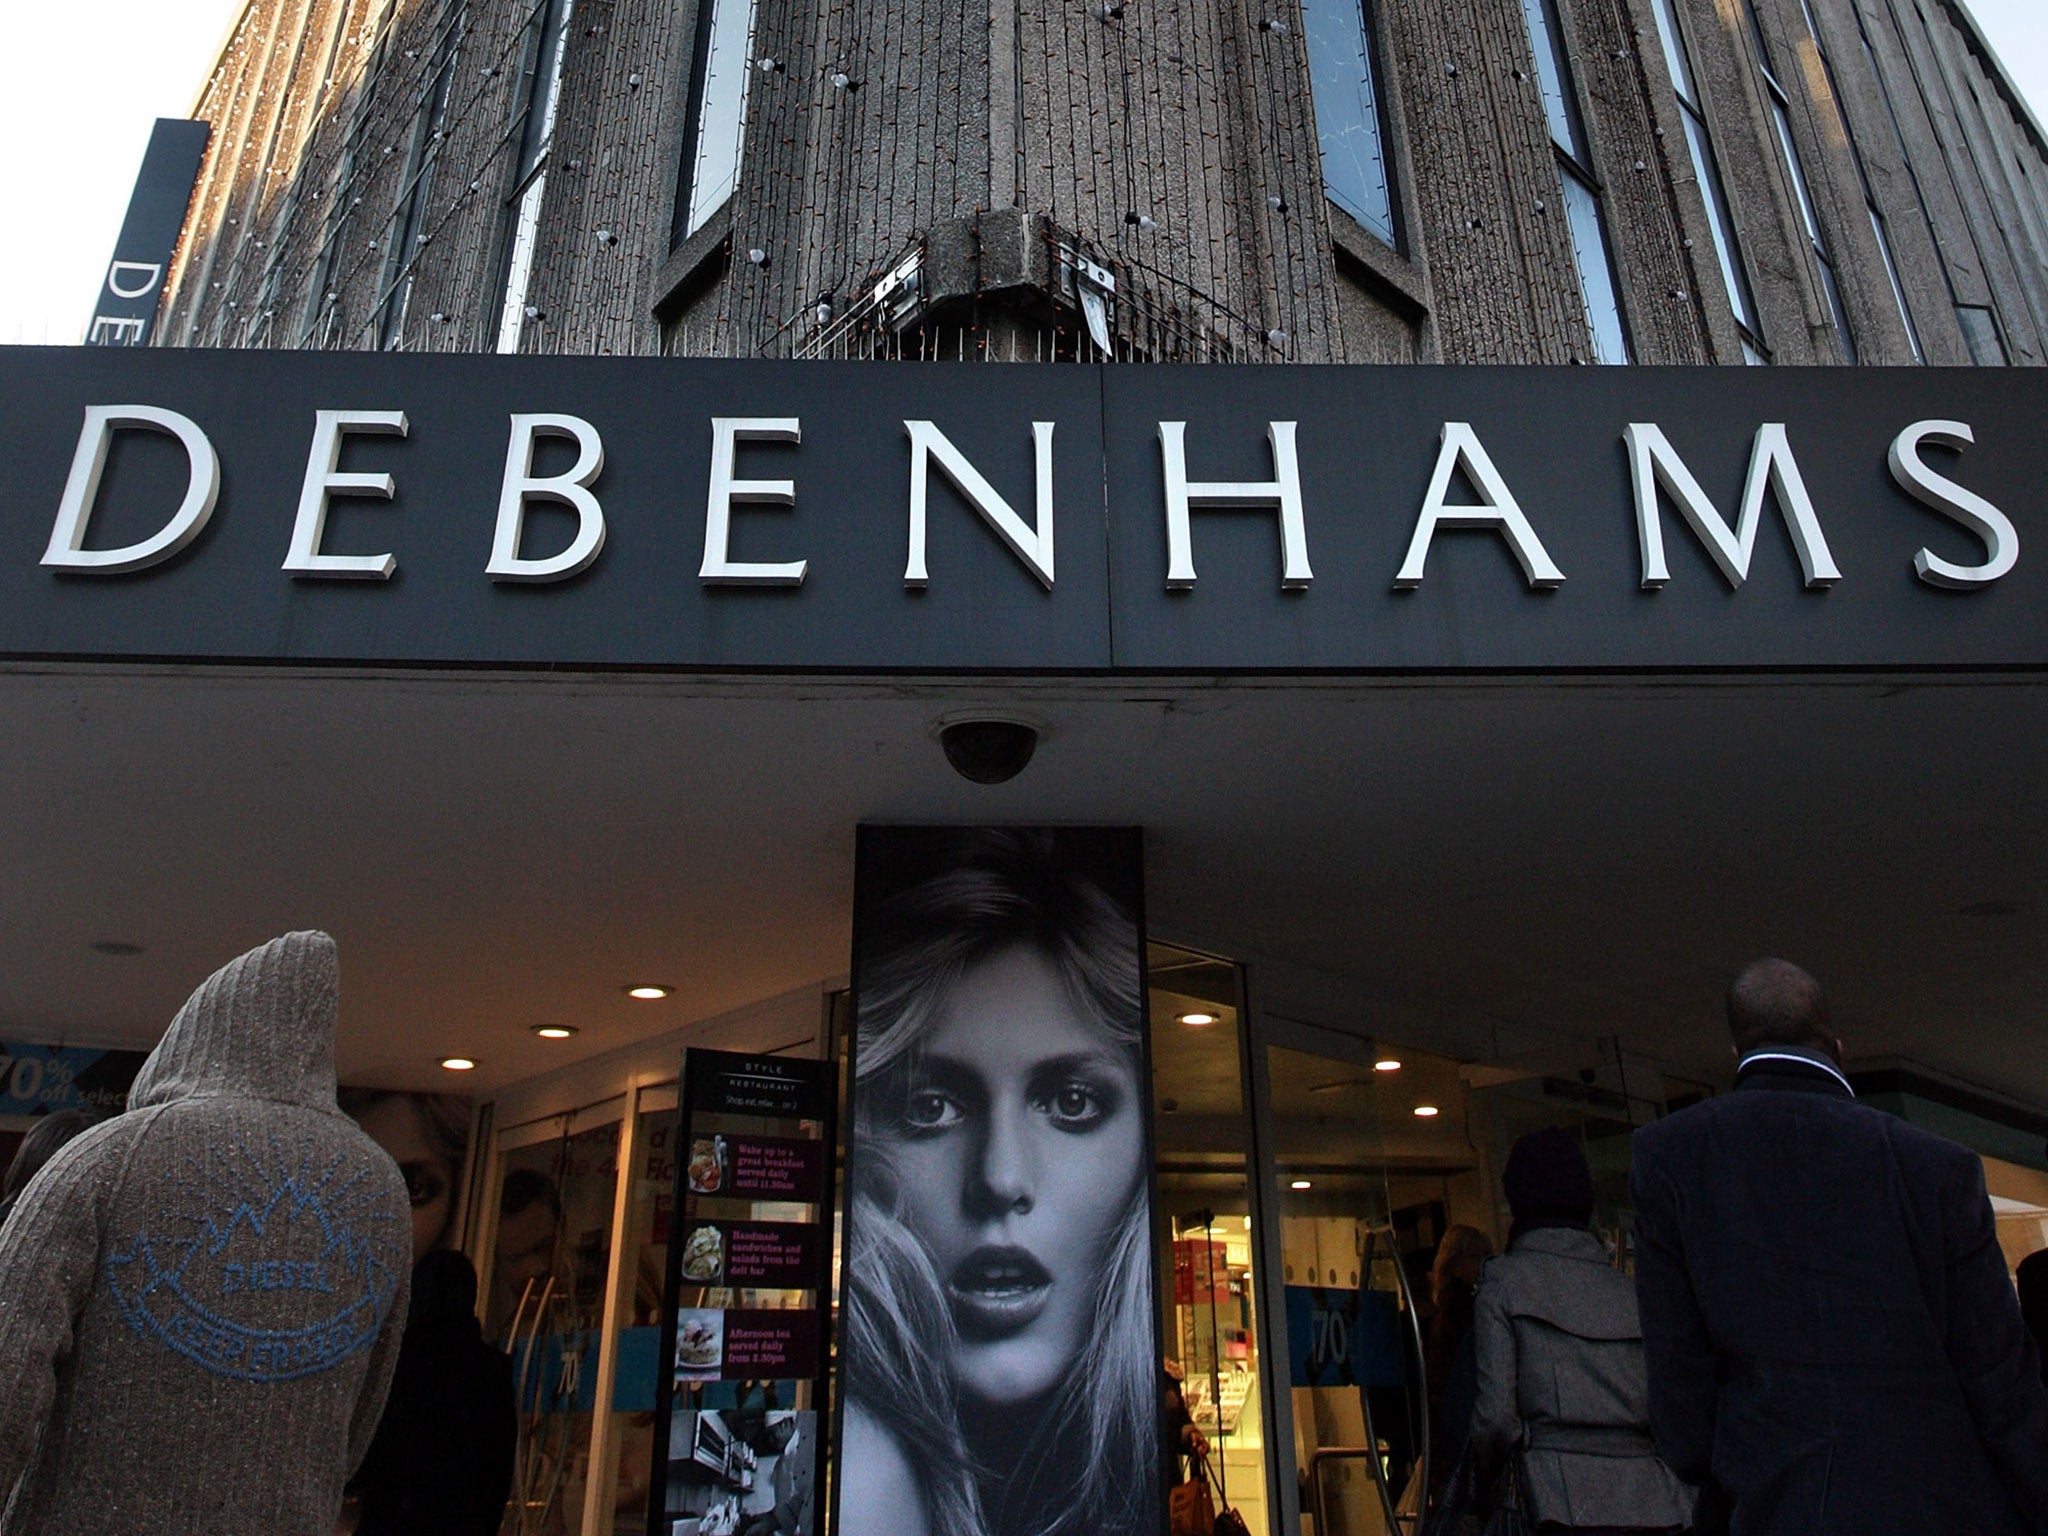 Debenhams in Oxford Street, where a woman fell from an escalator